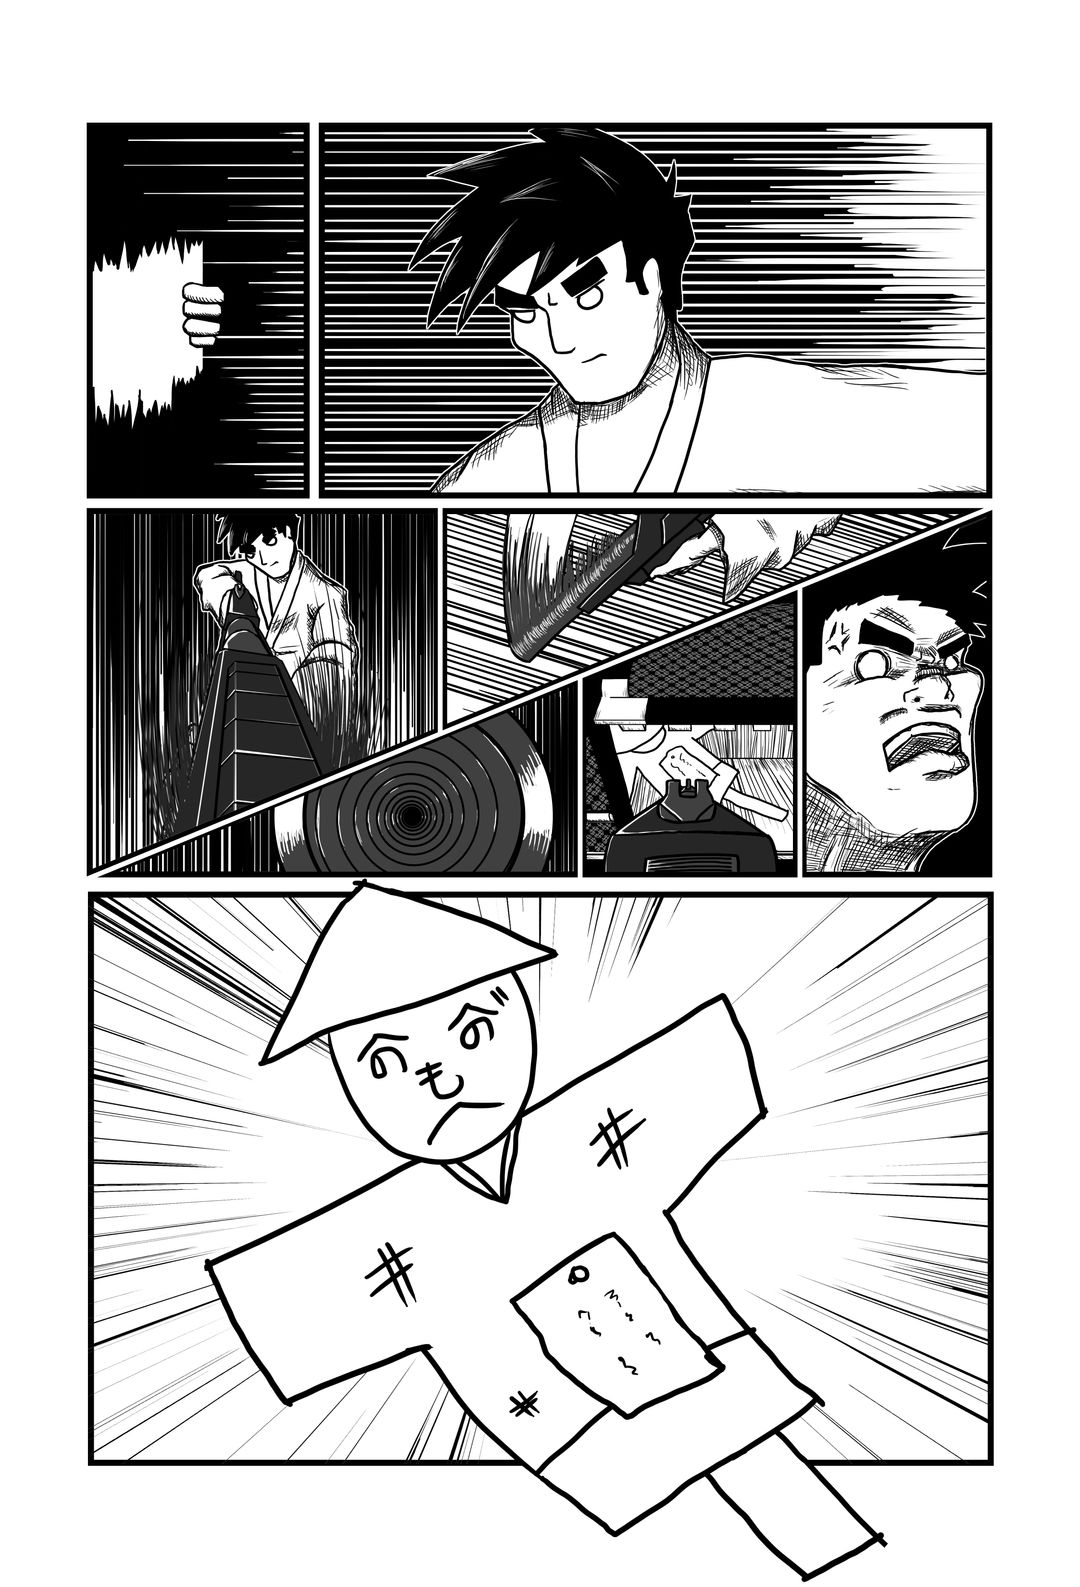 Shotgun Samurai 09 panel 9